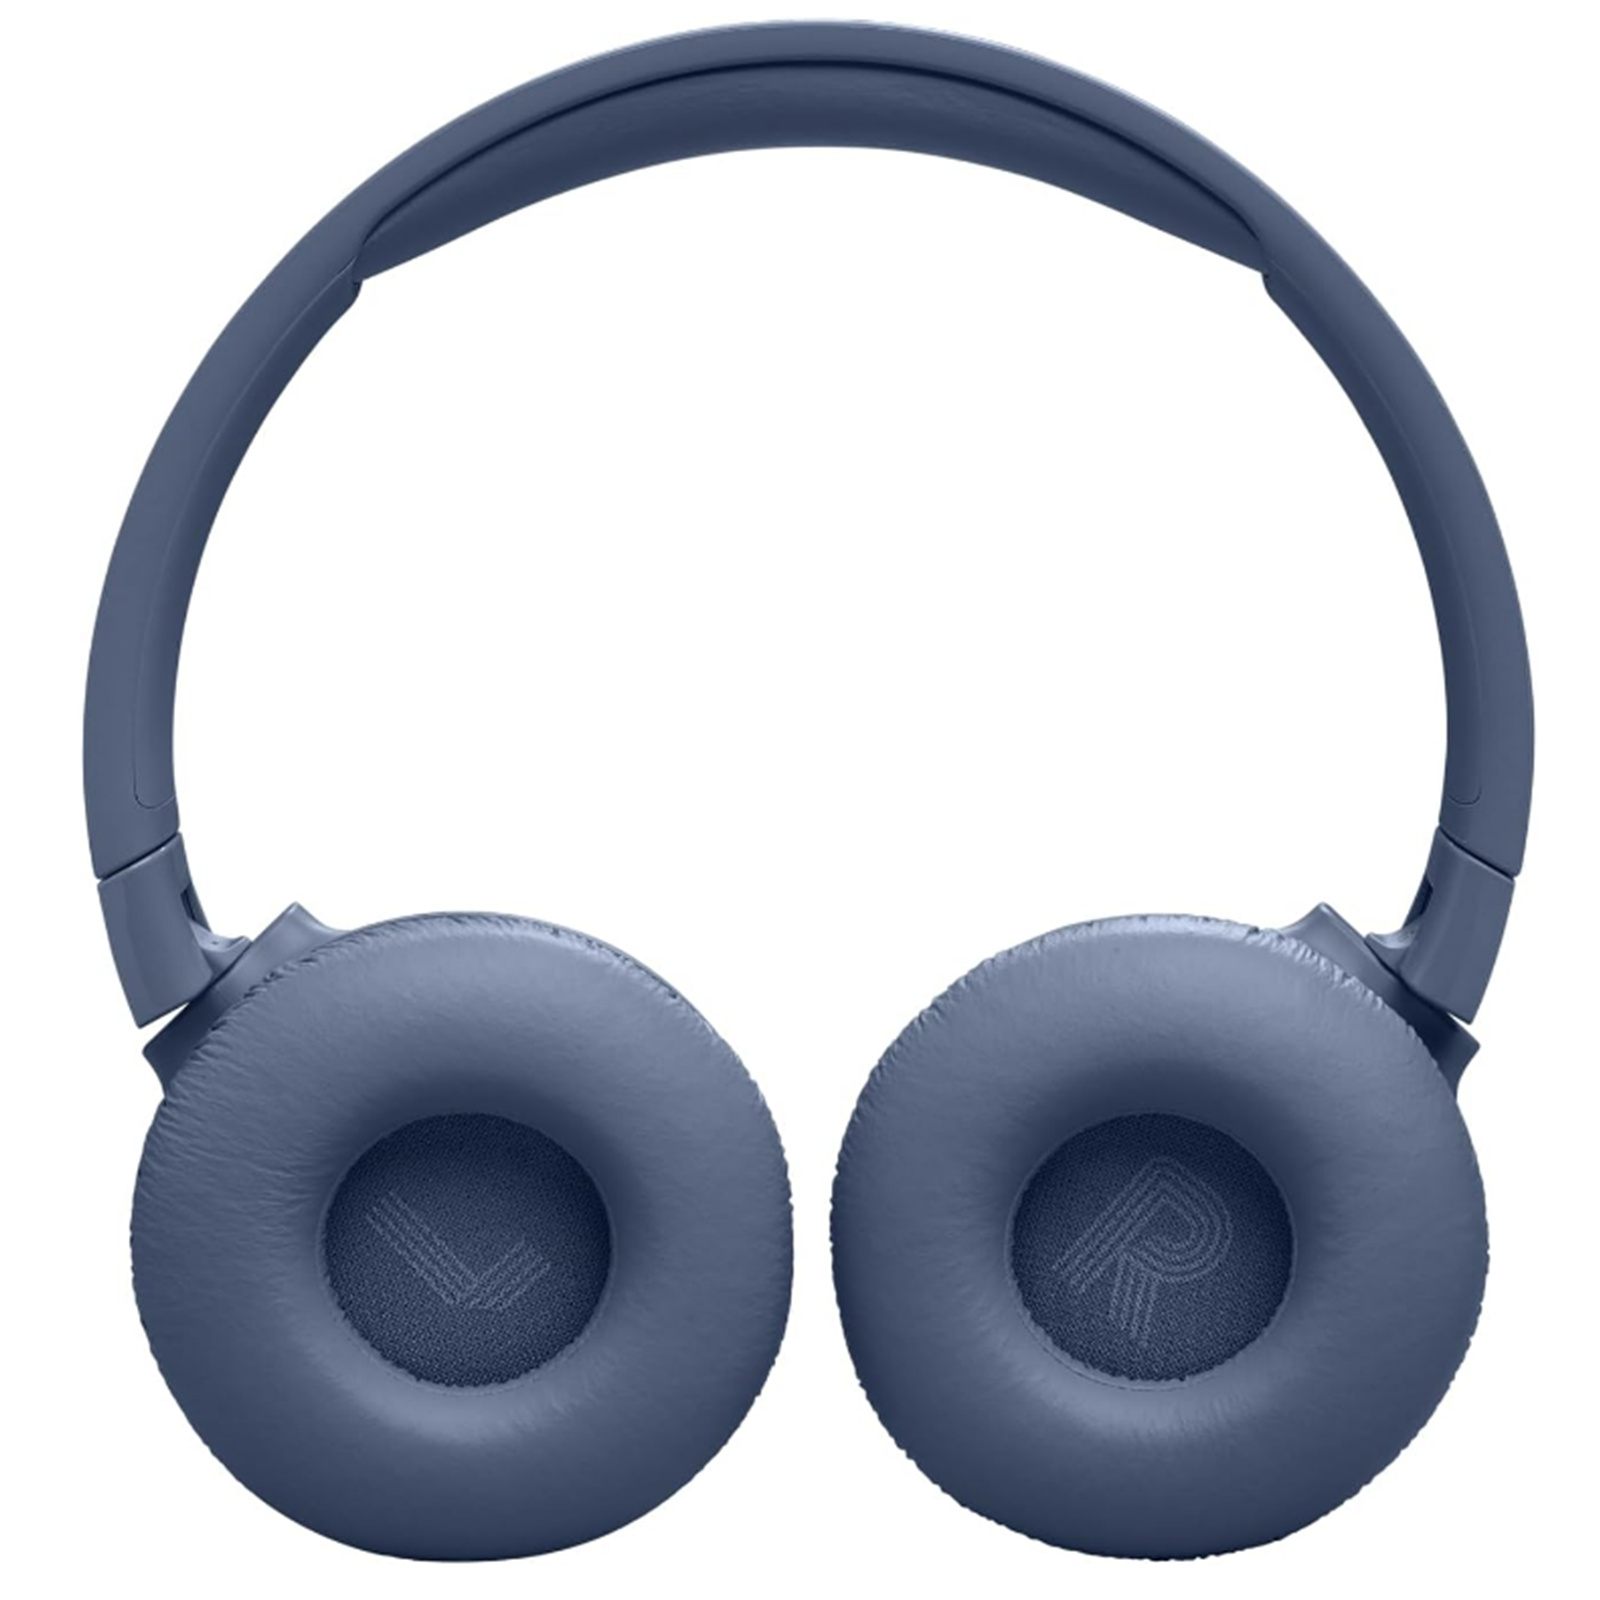 Buy the JBL Tune 670 BTNC Wireless Noise Cancelling Headphones - Blue -...  ( JBLT670NCBLU ) online